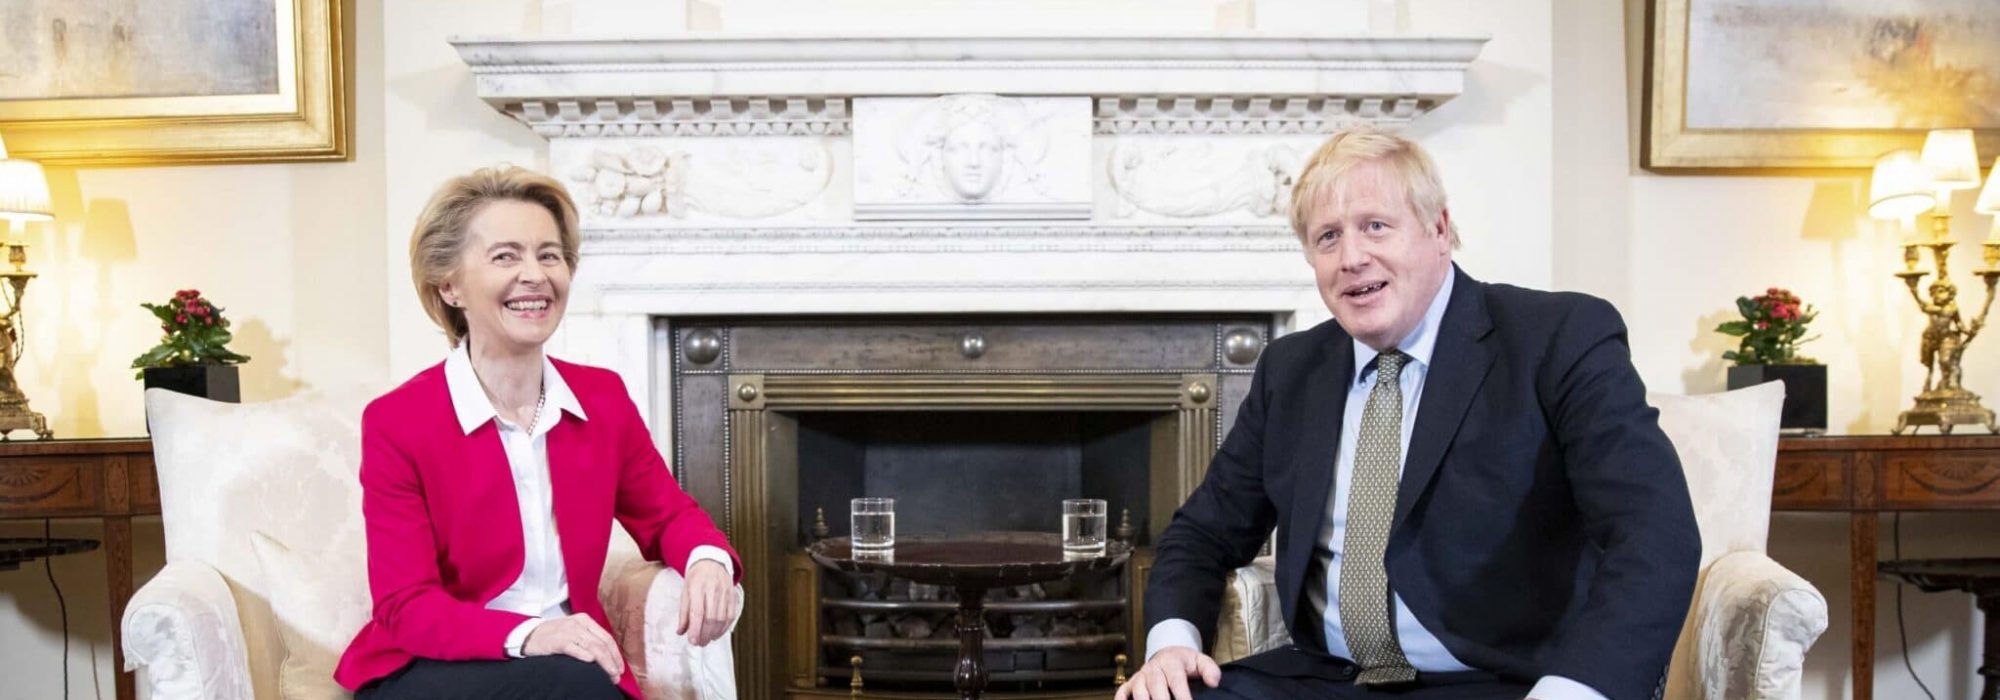 Prime Minister Boris Johnson bilateral meeting with President of the European Commission, Ursula von der Leyen.